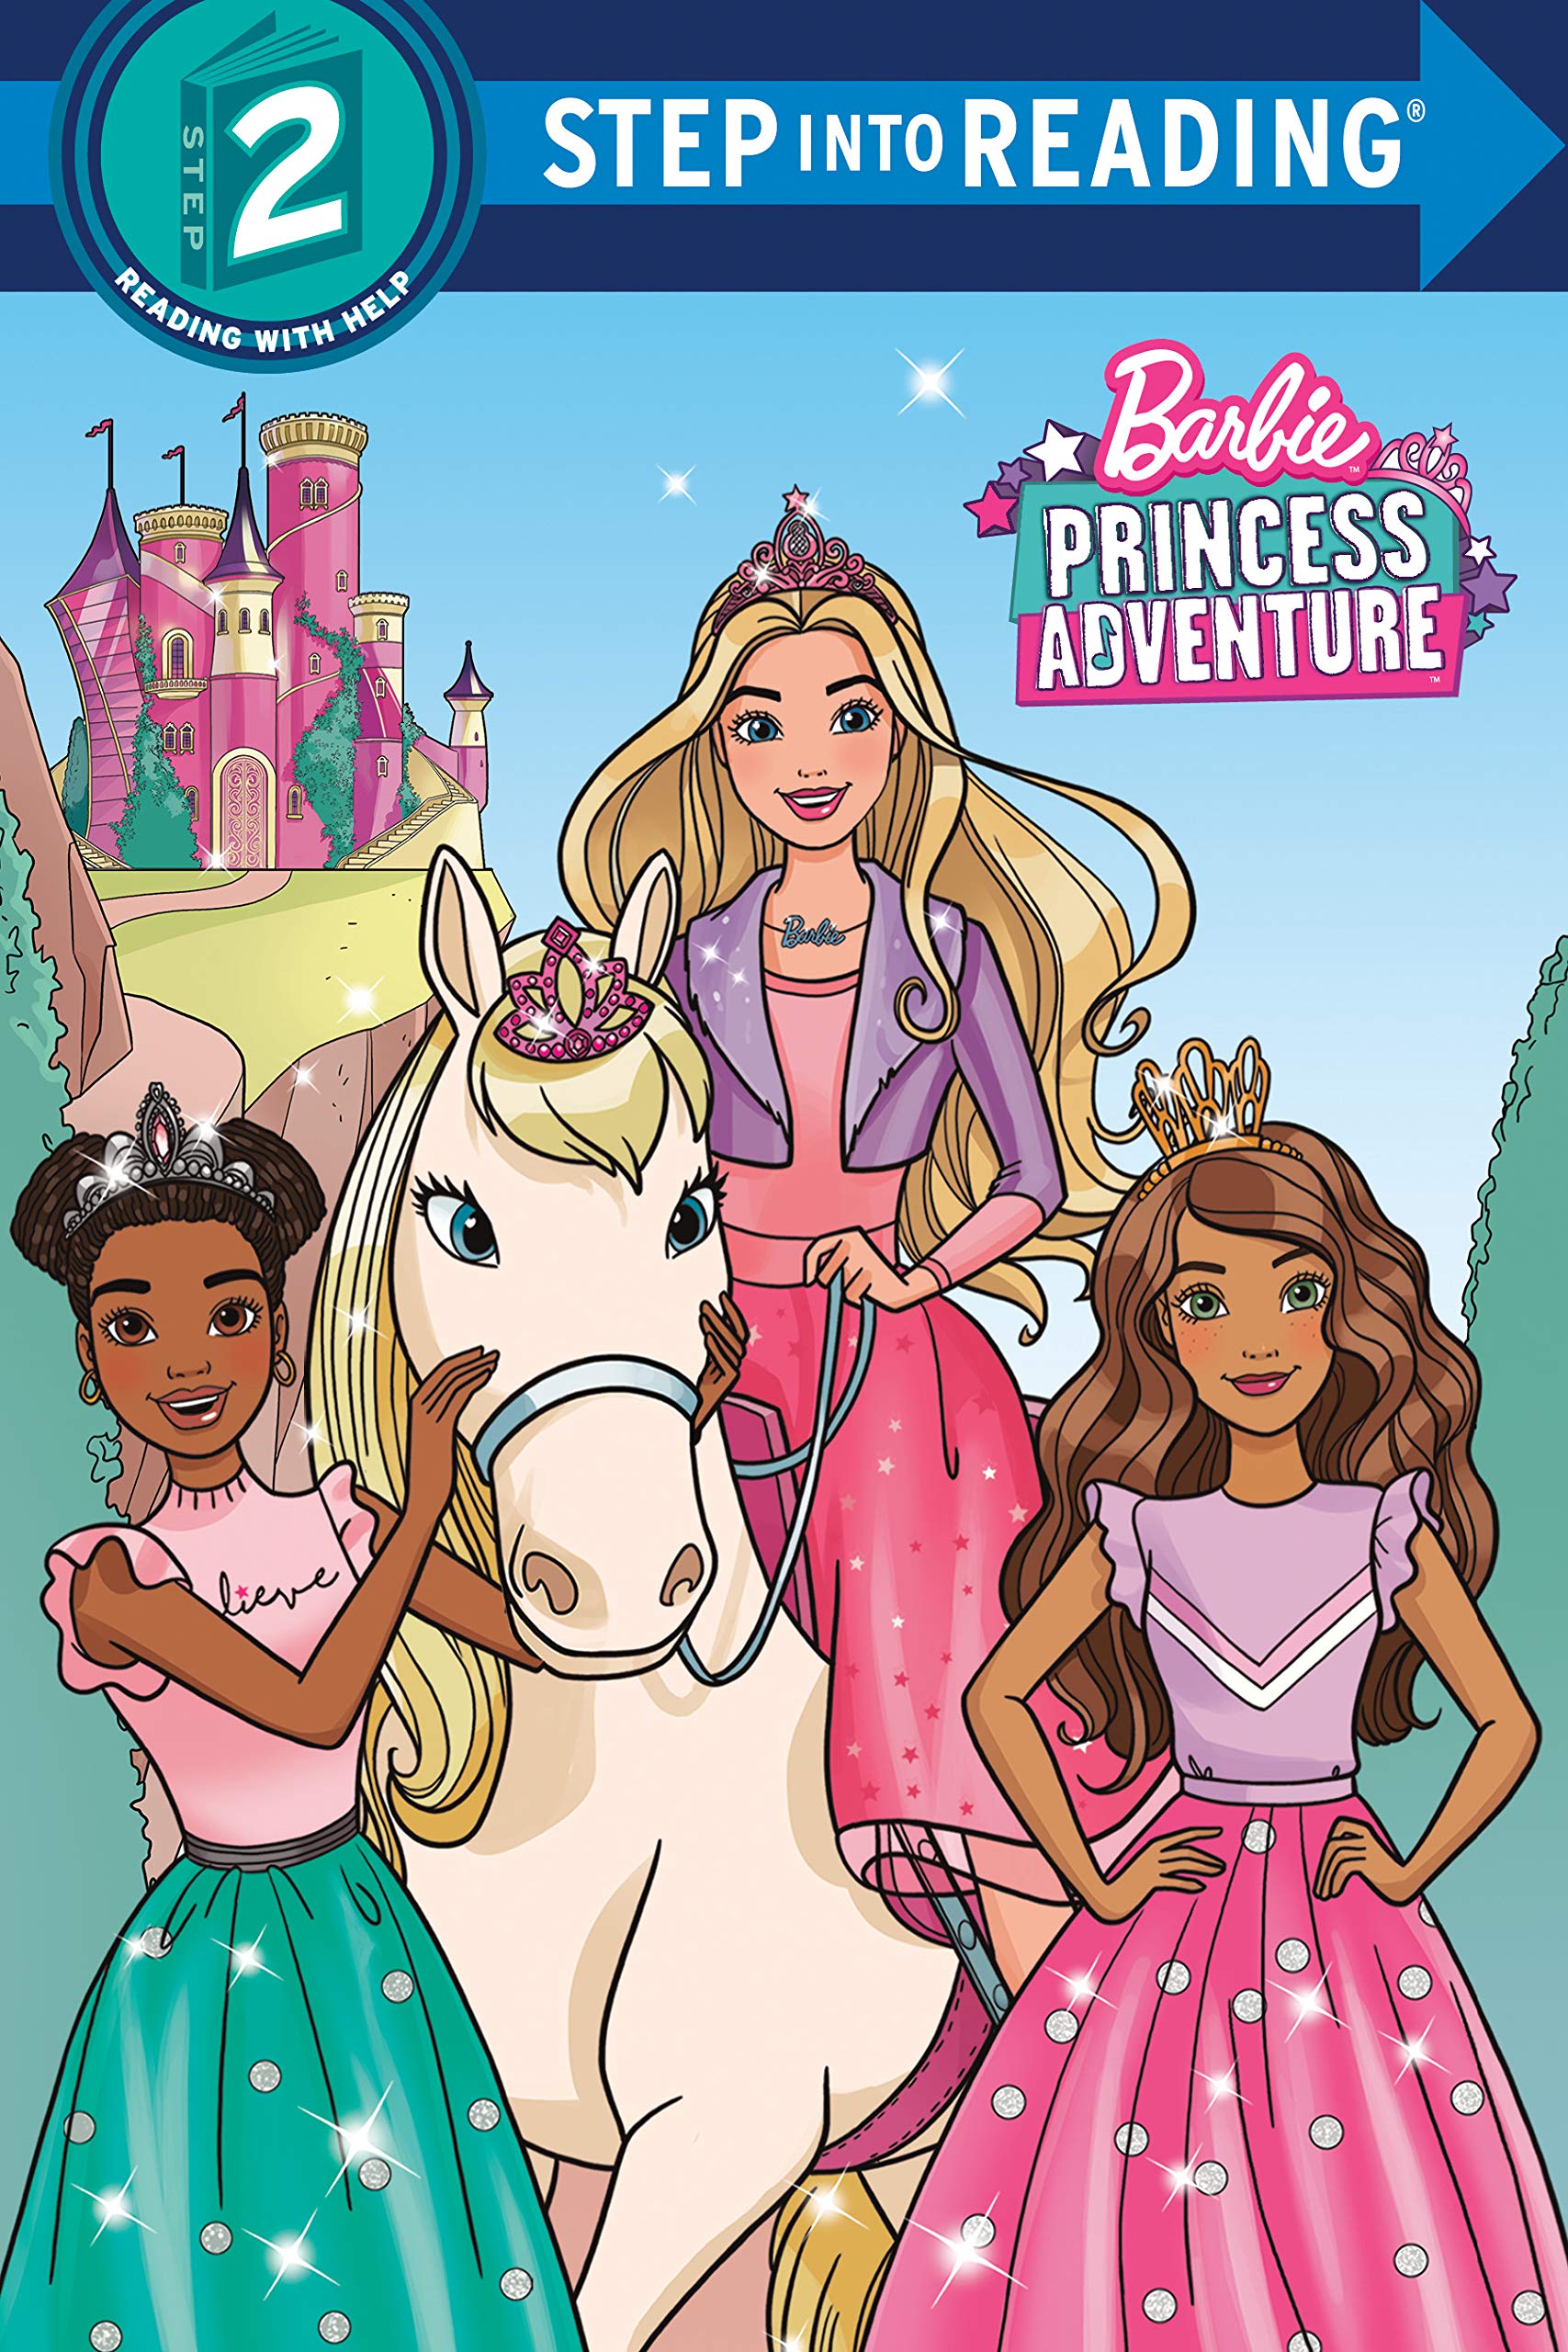 Princess Adventure (Barbie) (Step into Reading): Stephens, Elle, Random House: 9780593178614: Books